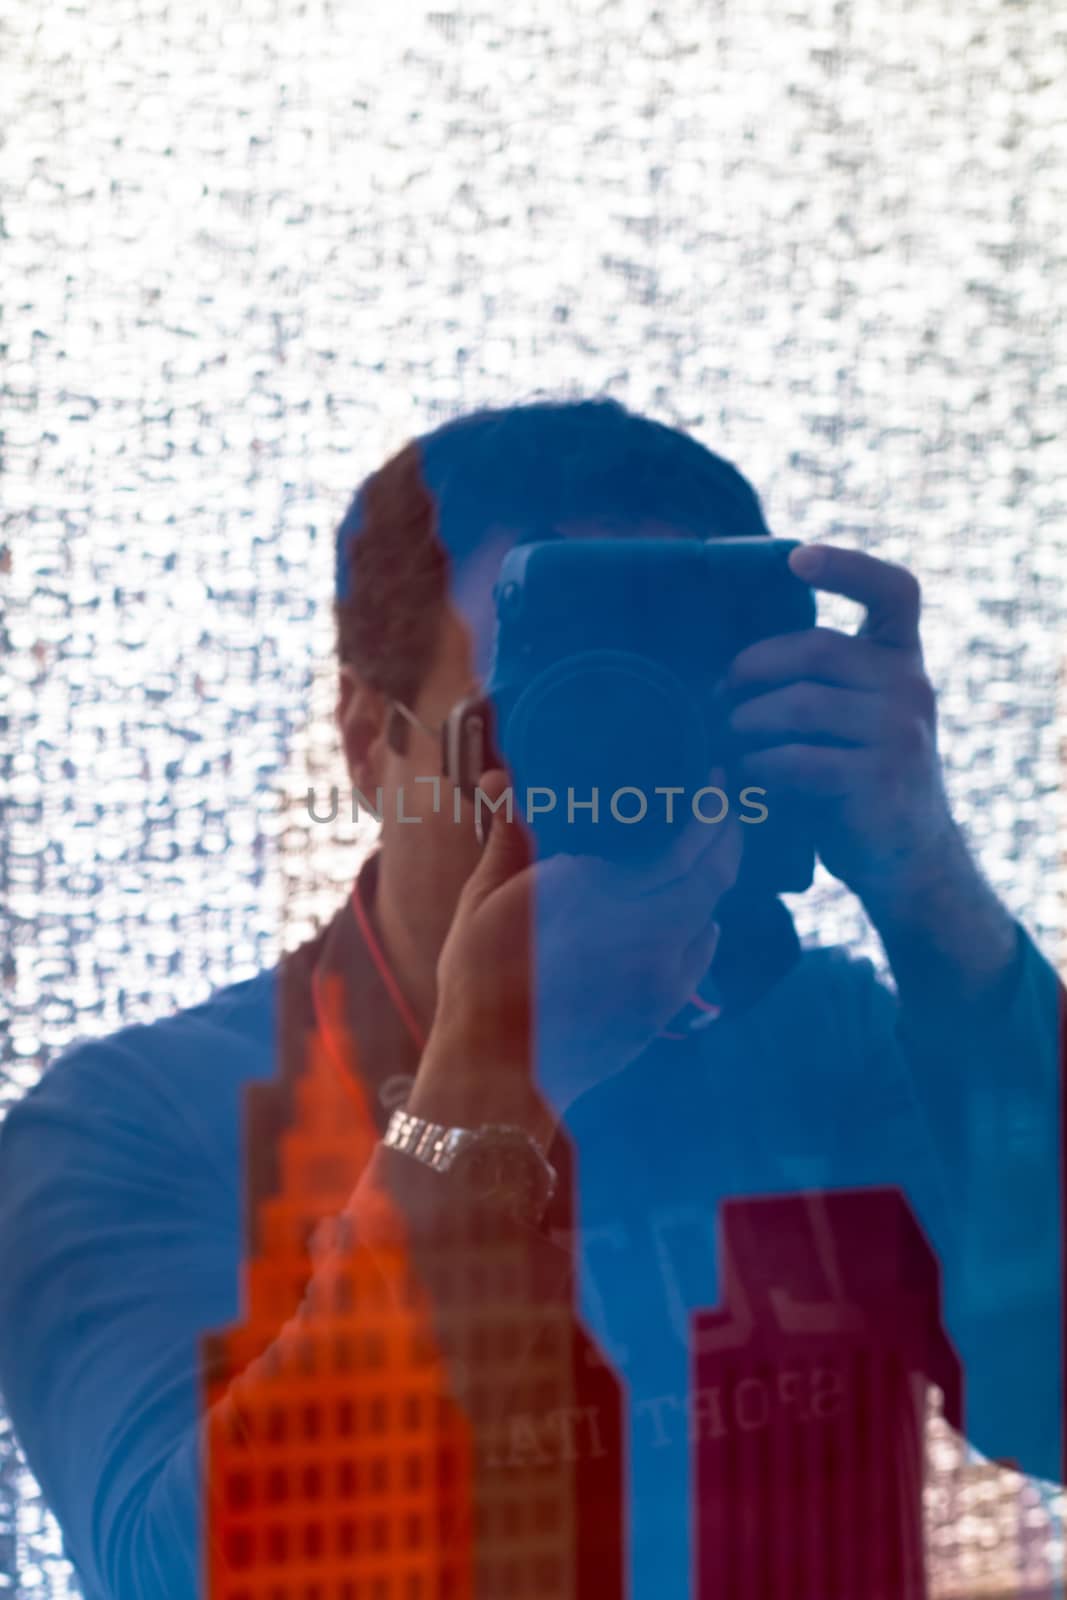 Photographer reflection by bolkan73